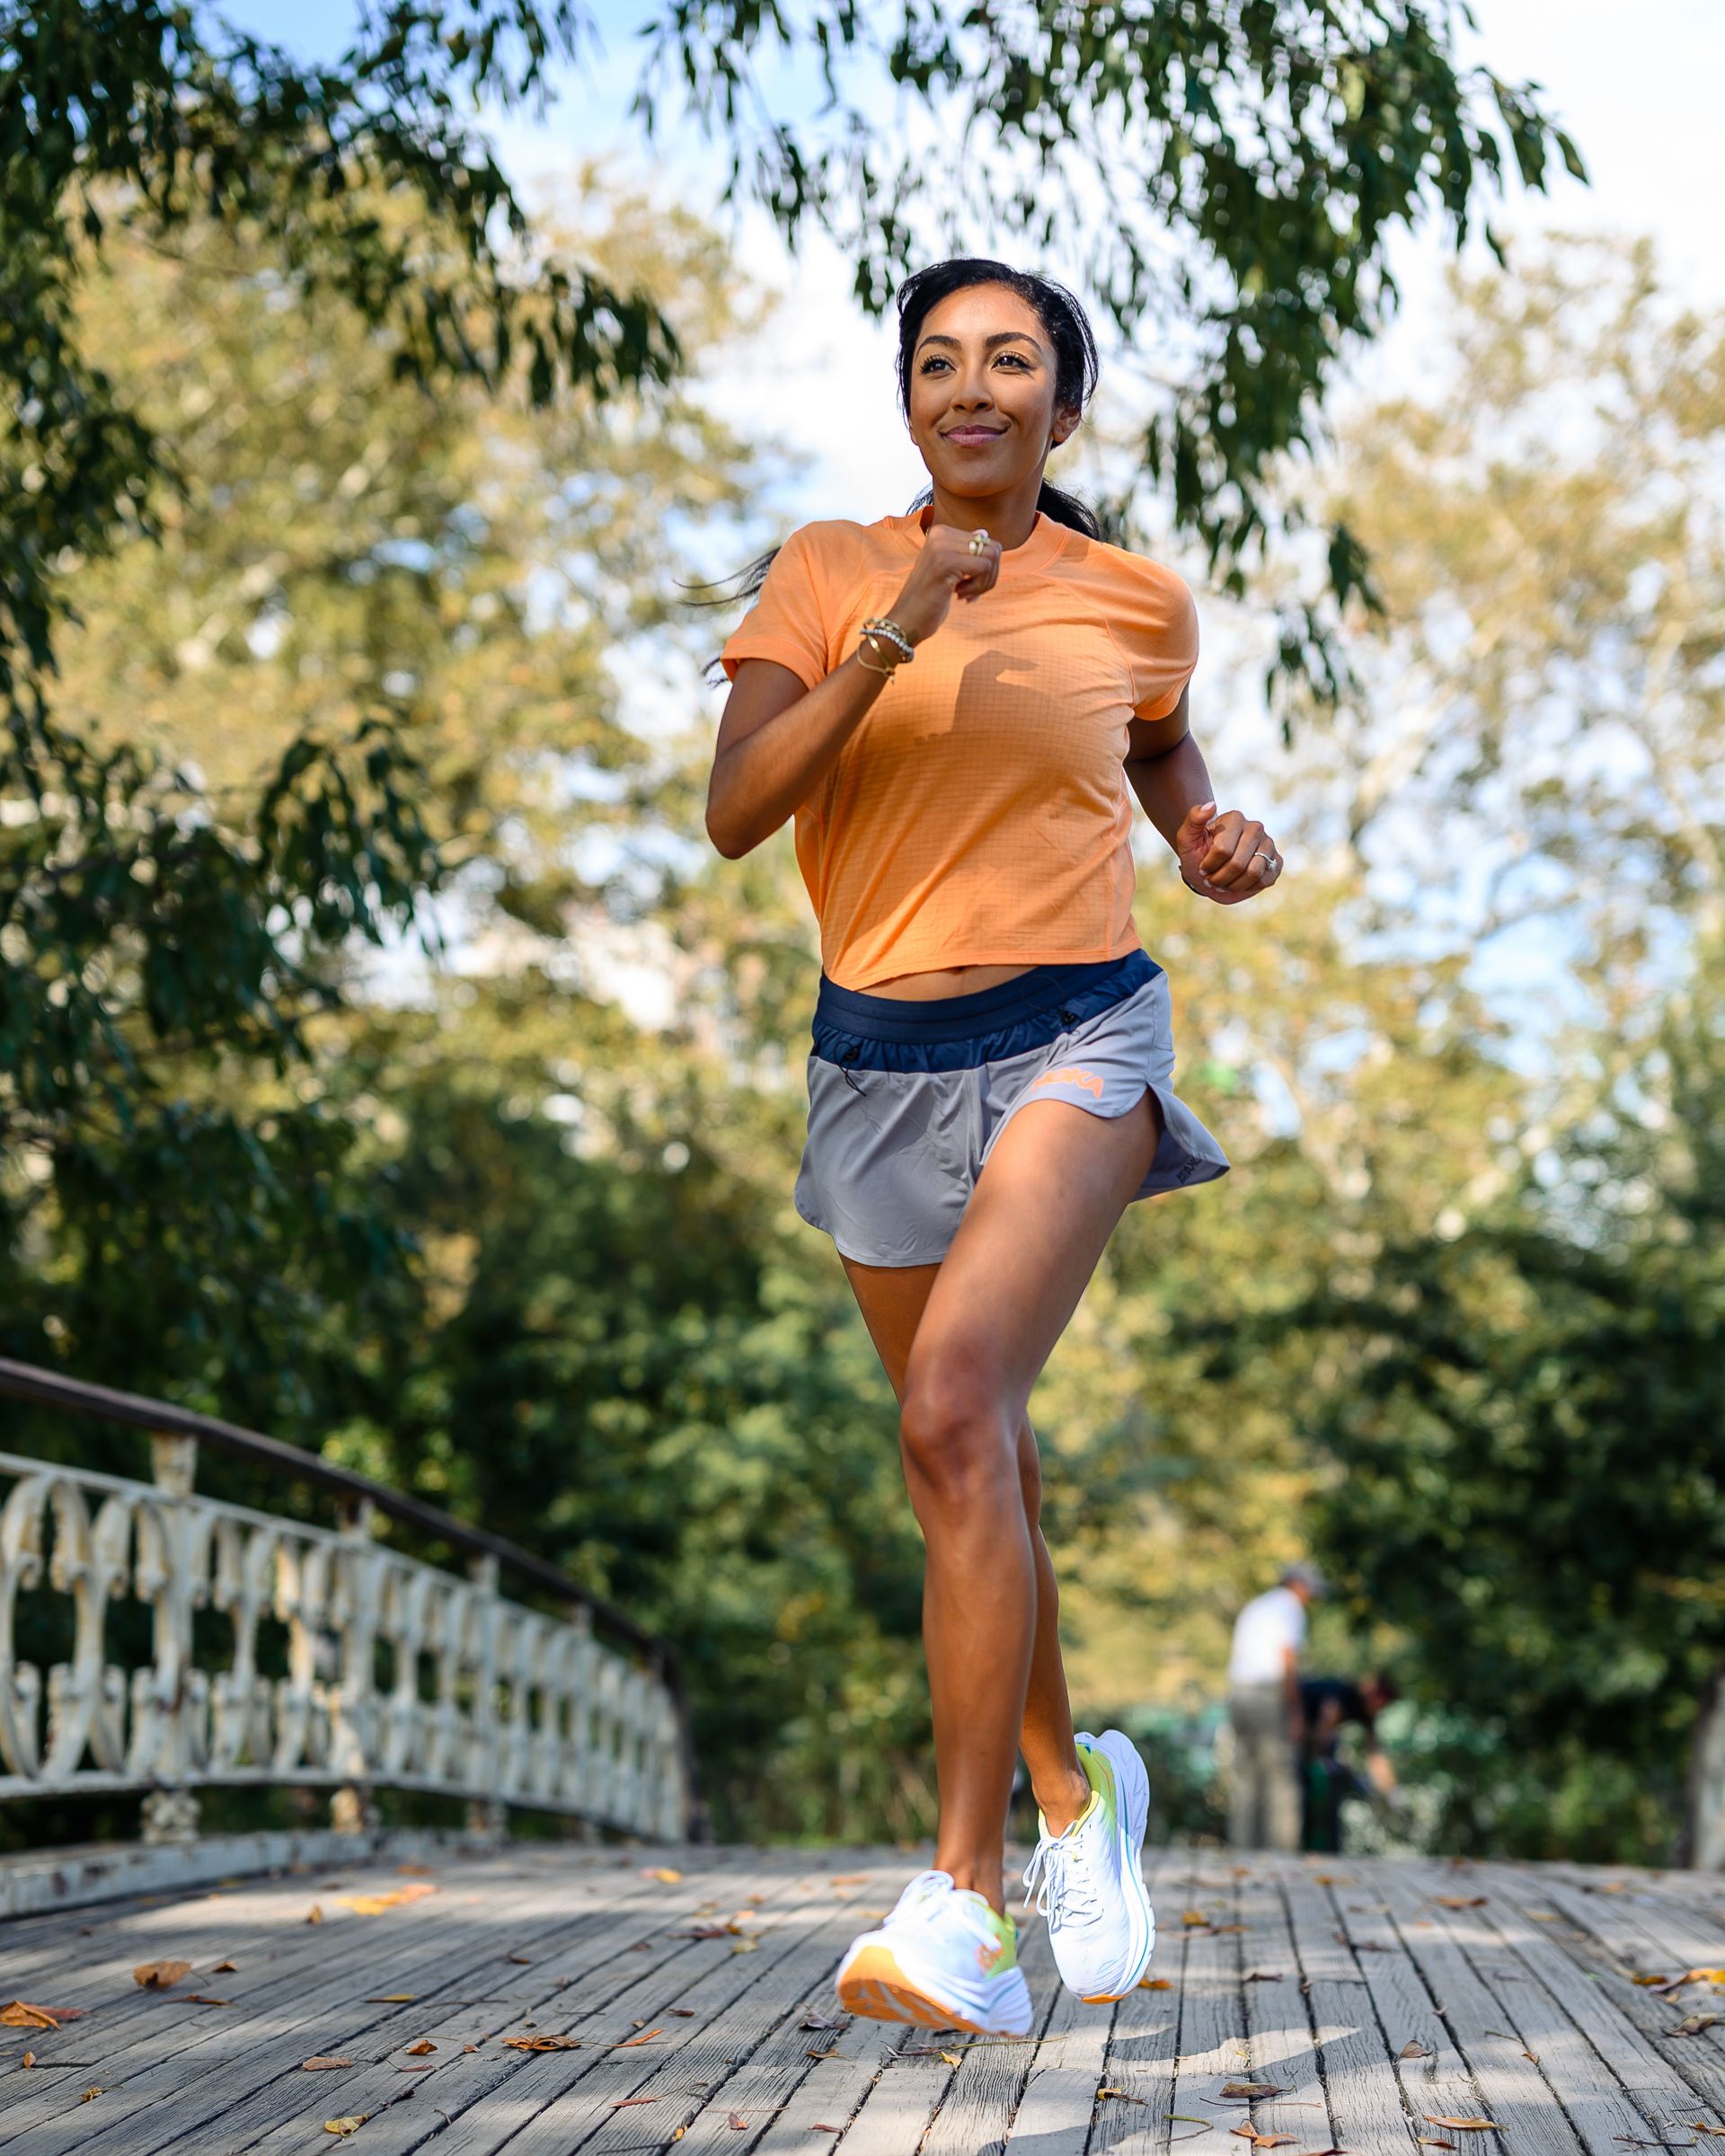 The Bachelorette' Star Tayshia Adams Is Running the NYC Marathon